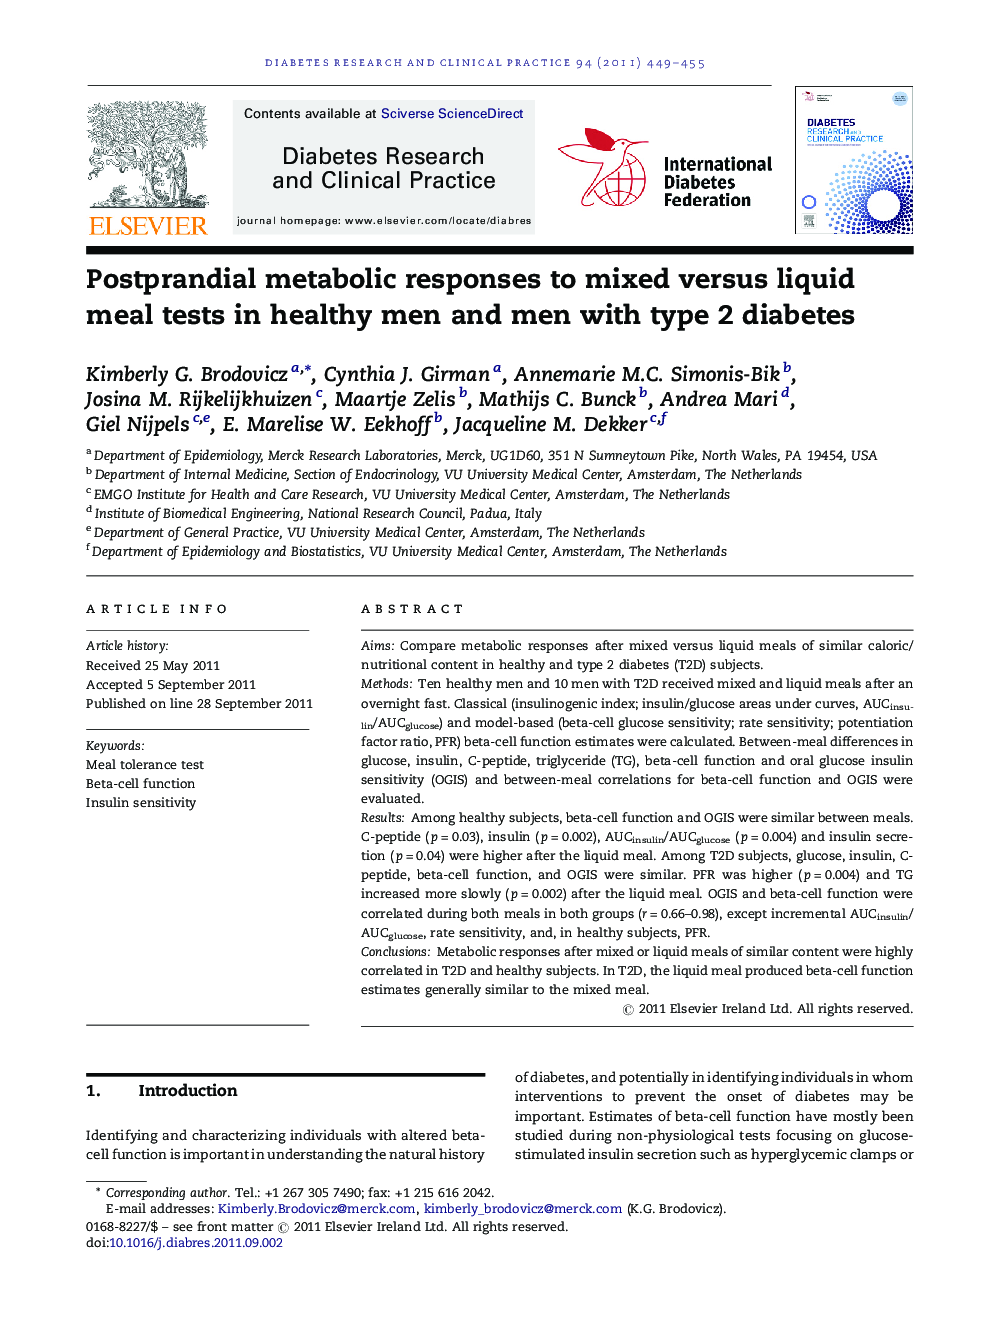 Postprandial metabolic responses to mixed versus liquid meal tests in healthy men and men with type 2 diabetes